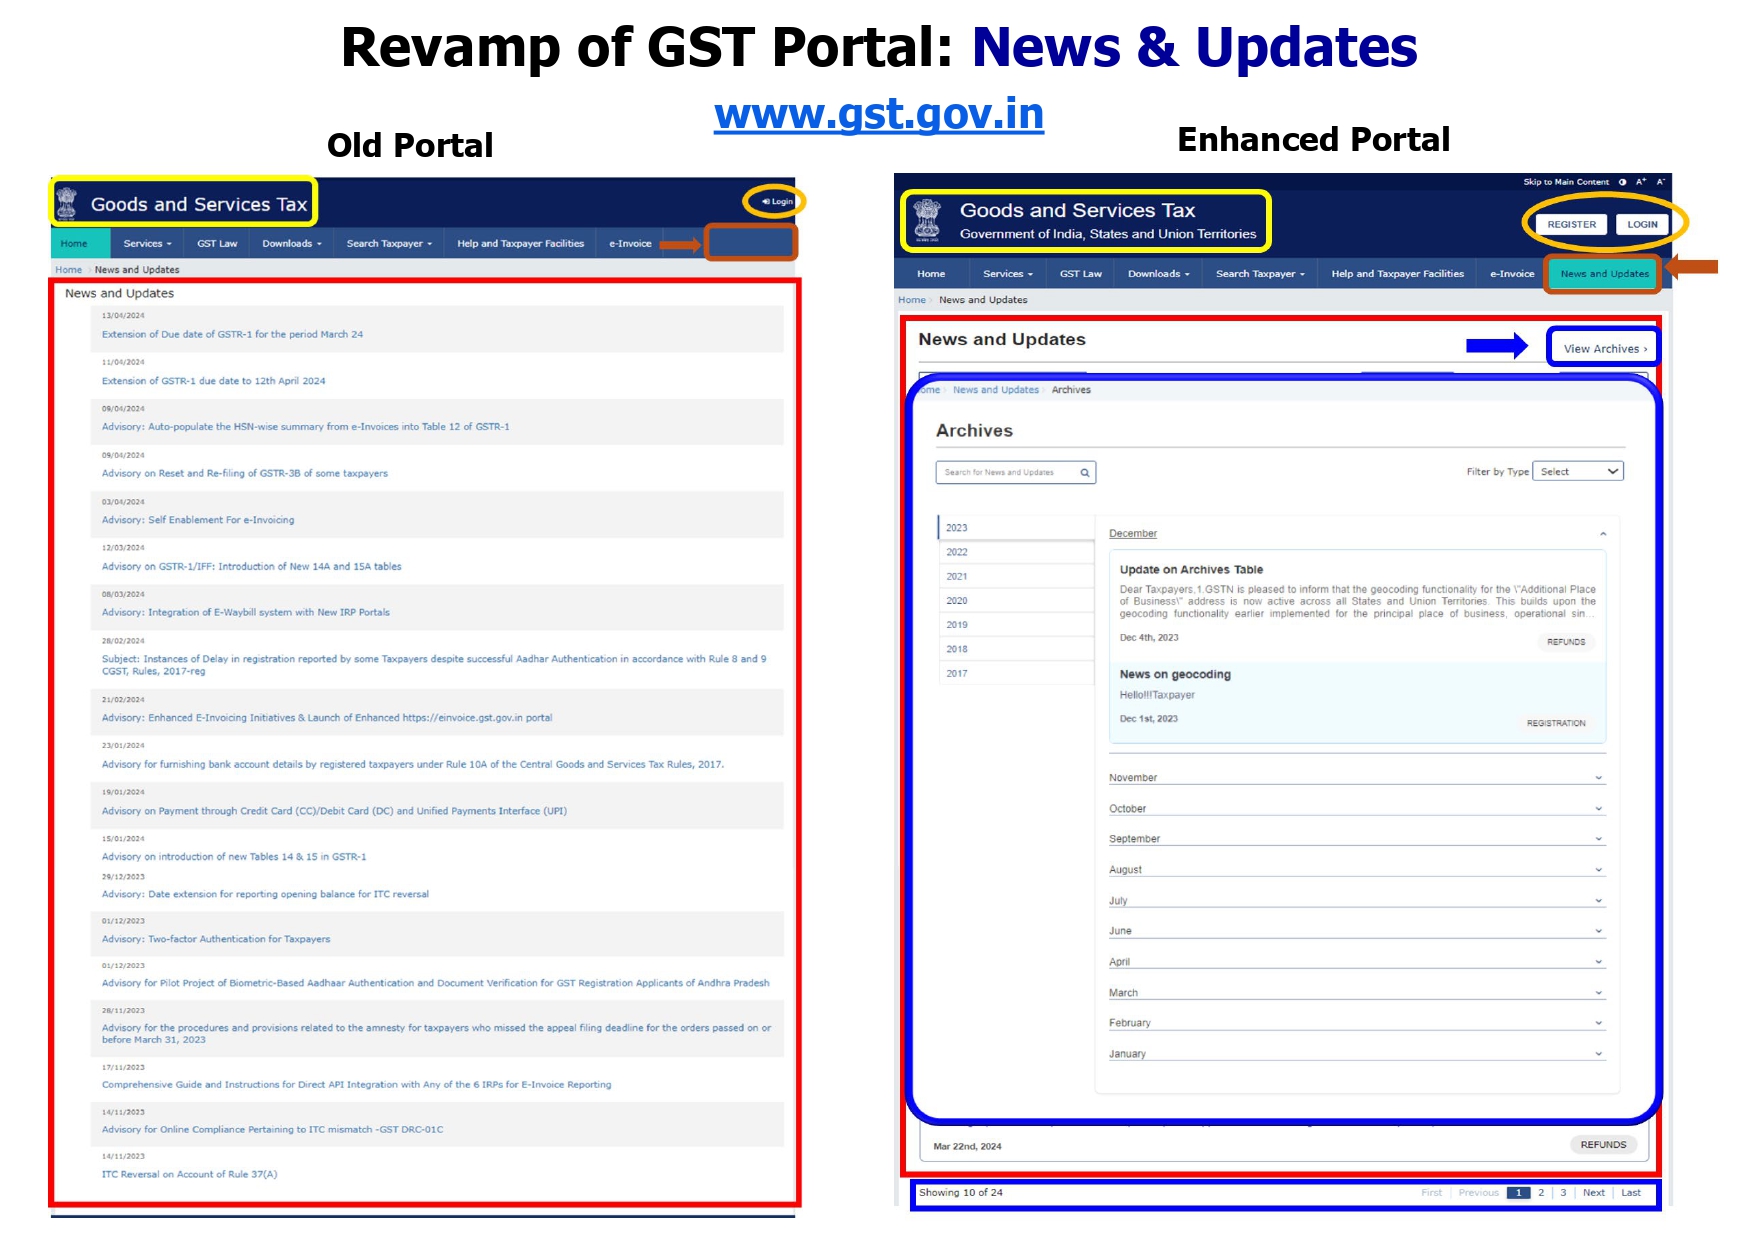 Enhancement in the GST Portal